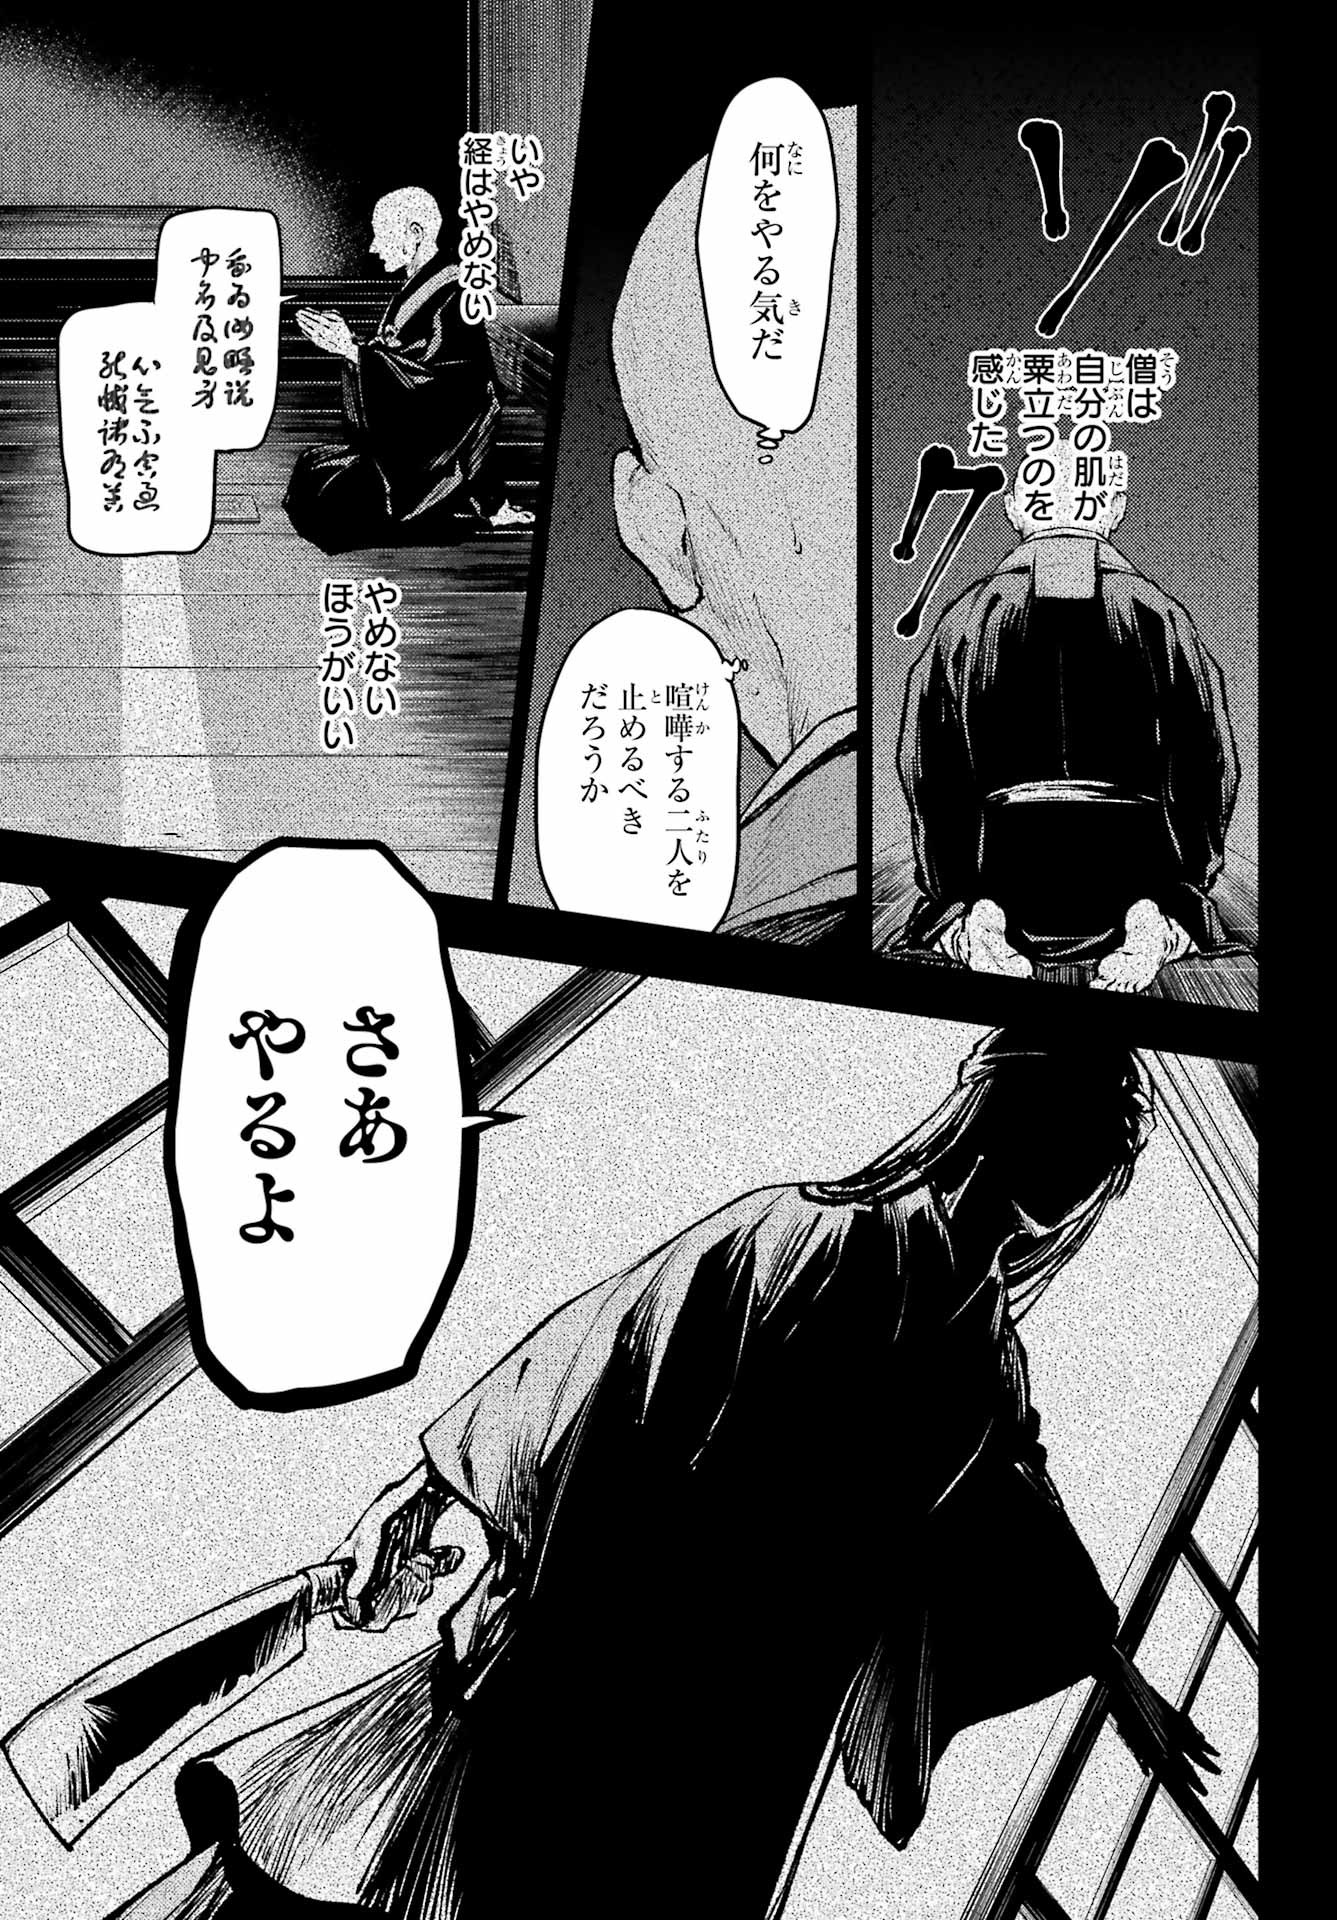 Kusuriya no Hitorigoto - Chapter 59-2 - Page 4